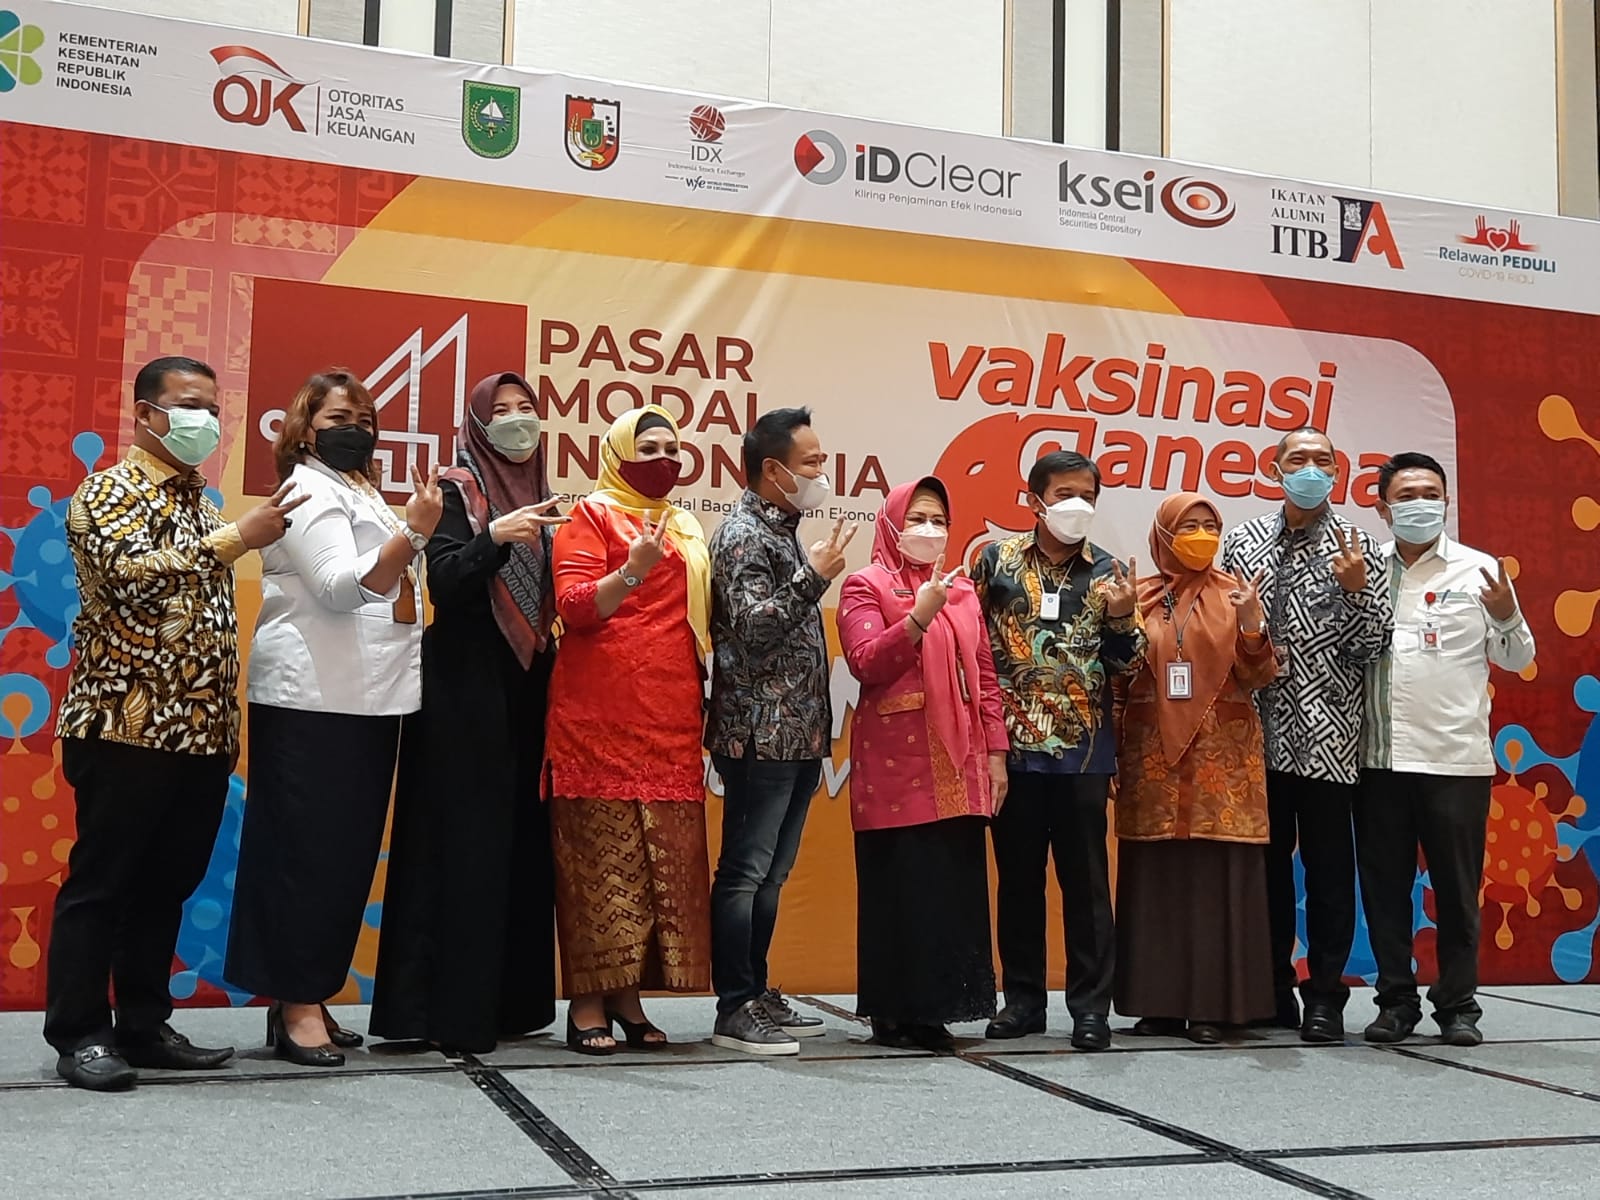 Pemko Pekanbaru Apresiasi Sentra Vaksinasi Covid-19 yang Digelar Pasar Modal Indonesia bersama IA ITB